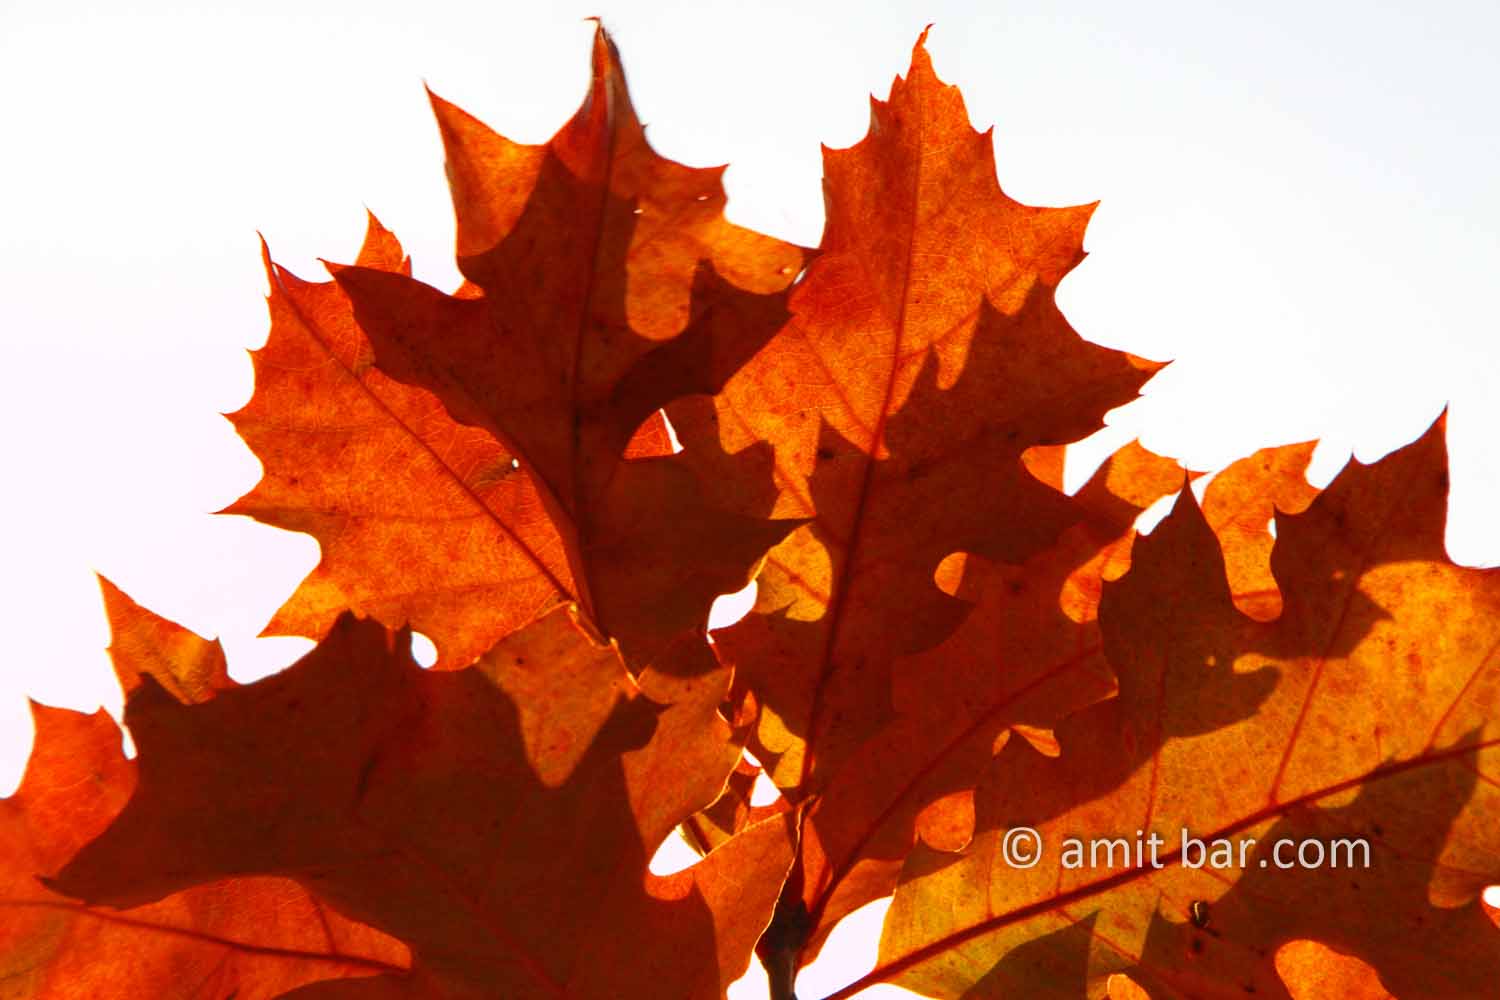 Red leaves: Red oak leaves